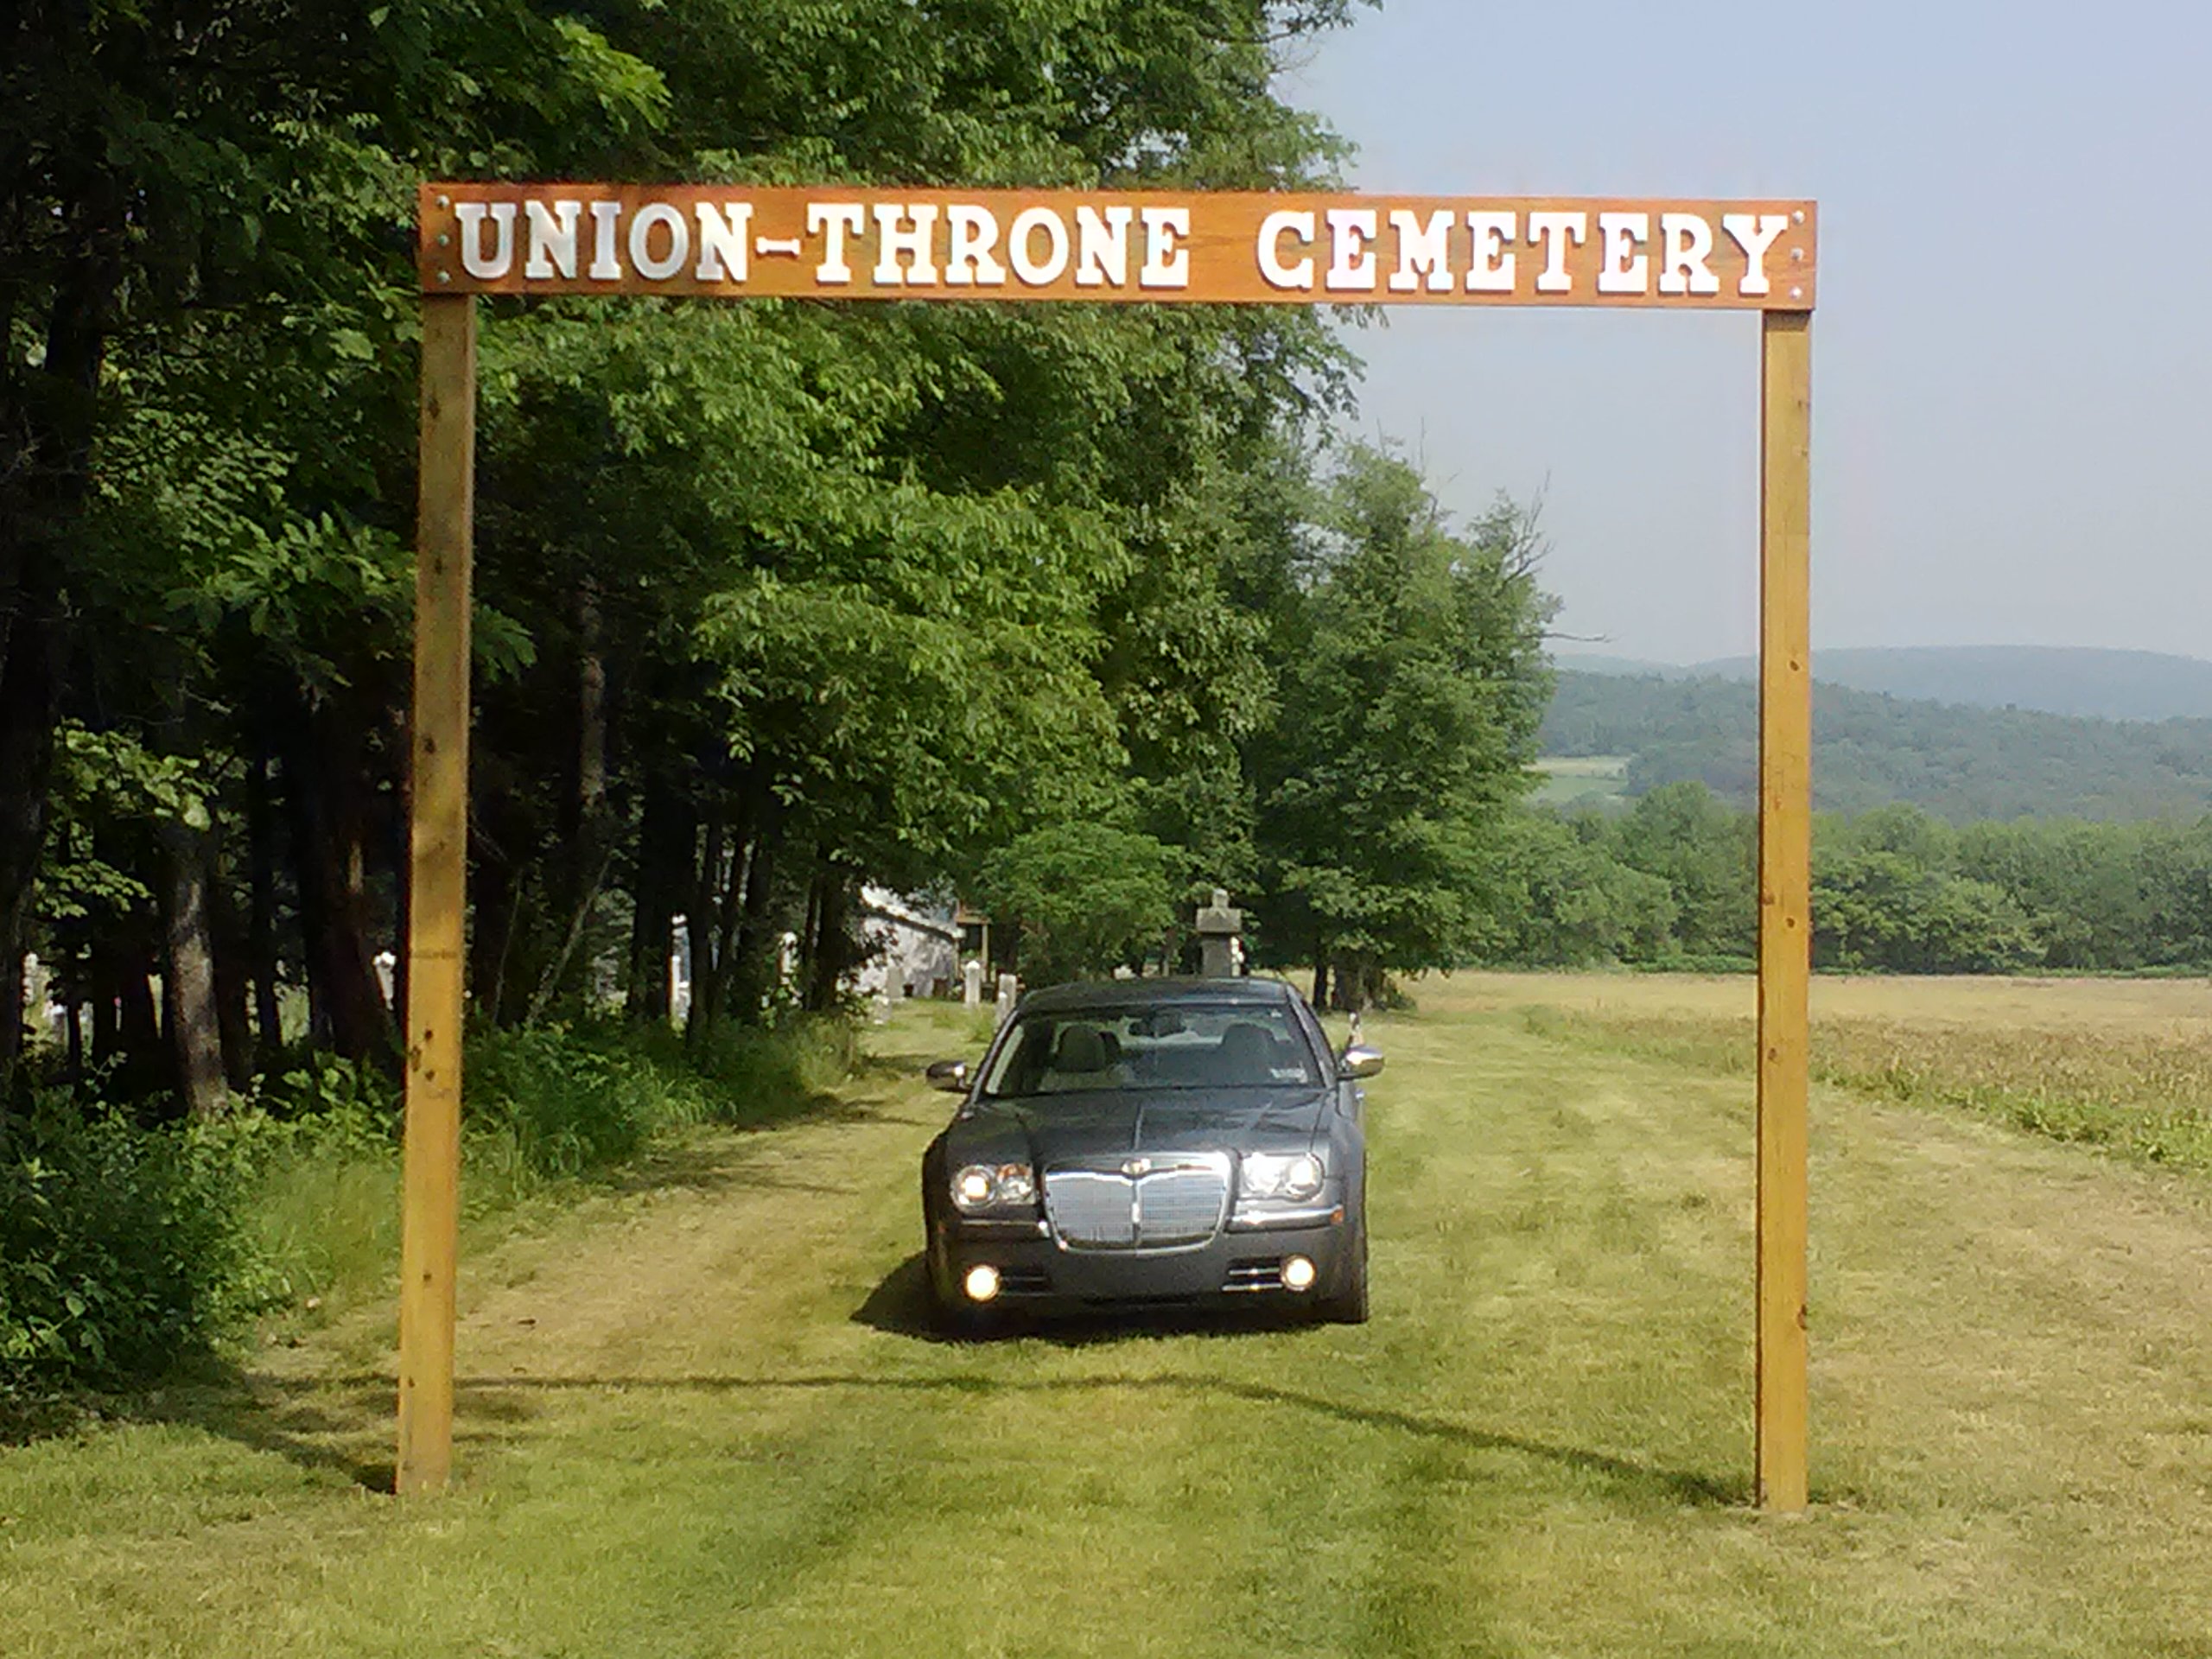 Poorman/2012-05-26_Union-Throne_Cemetery_McElhattan_Pa.jpg